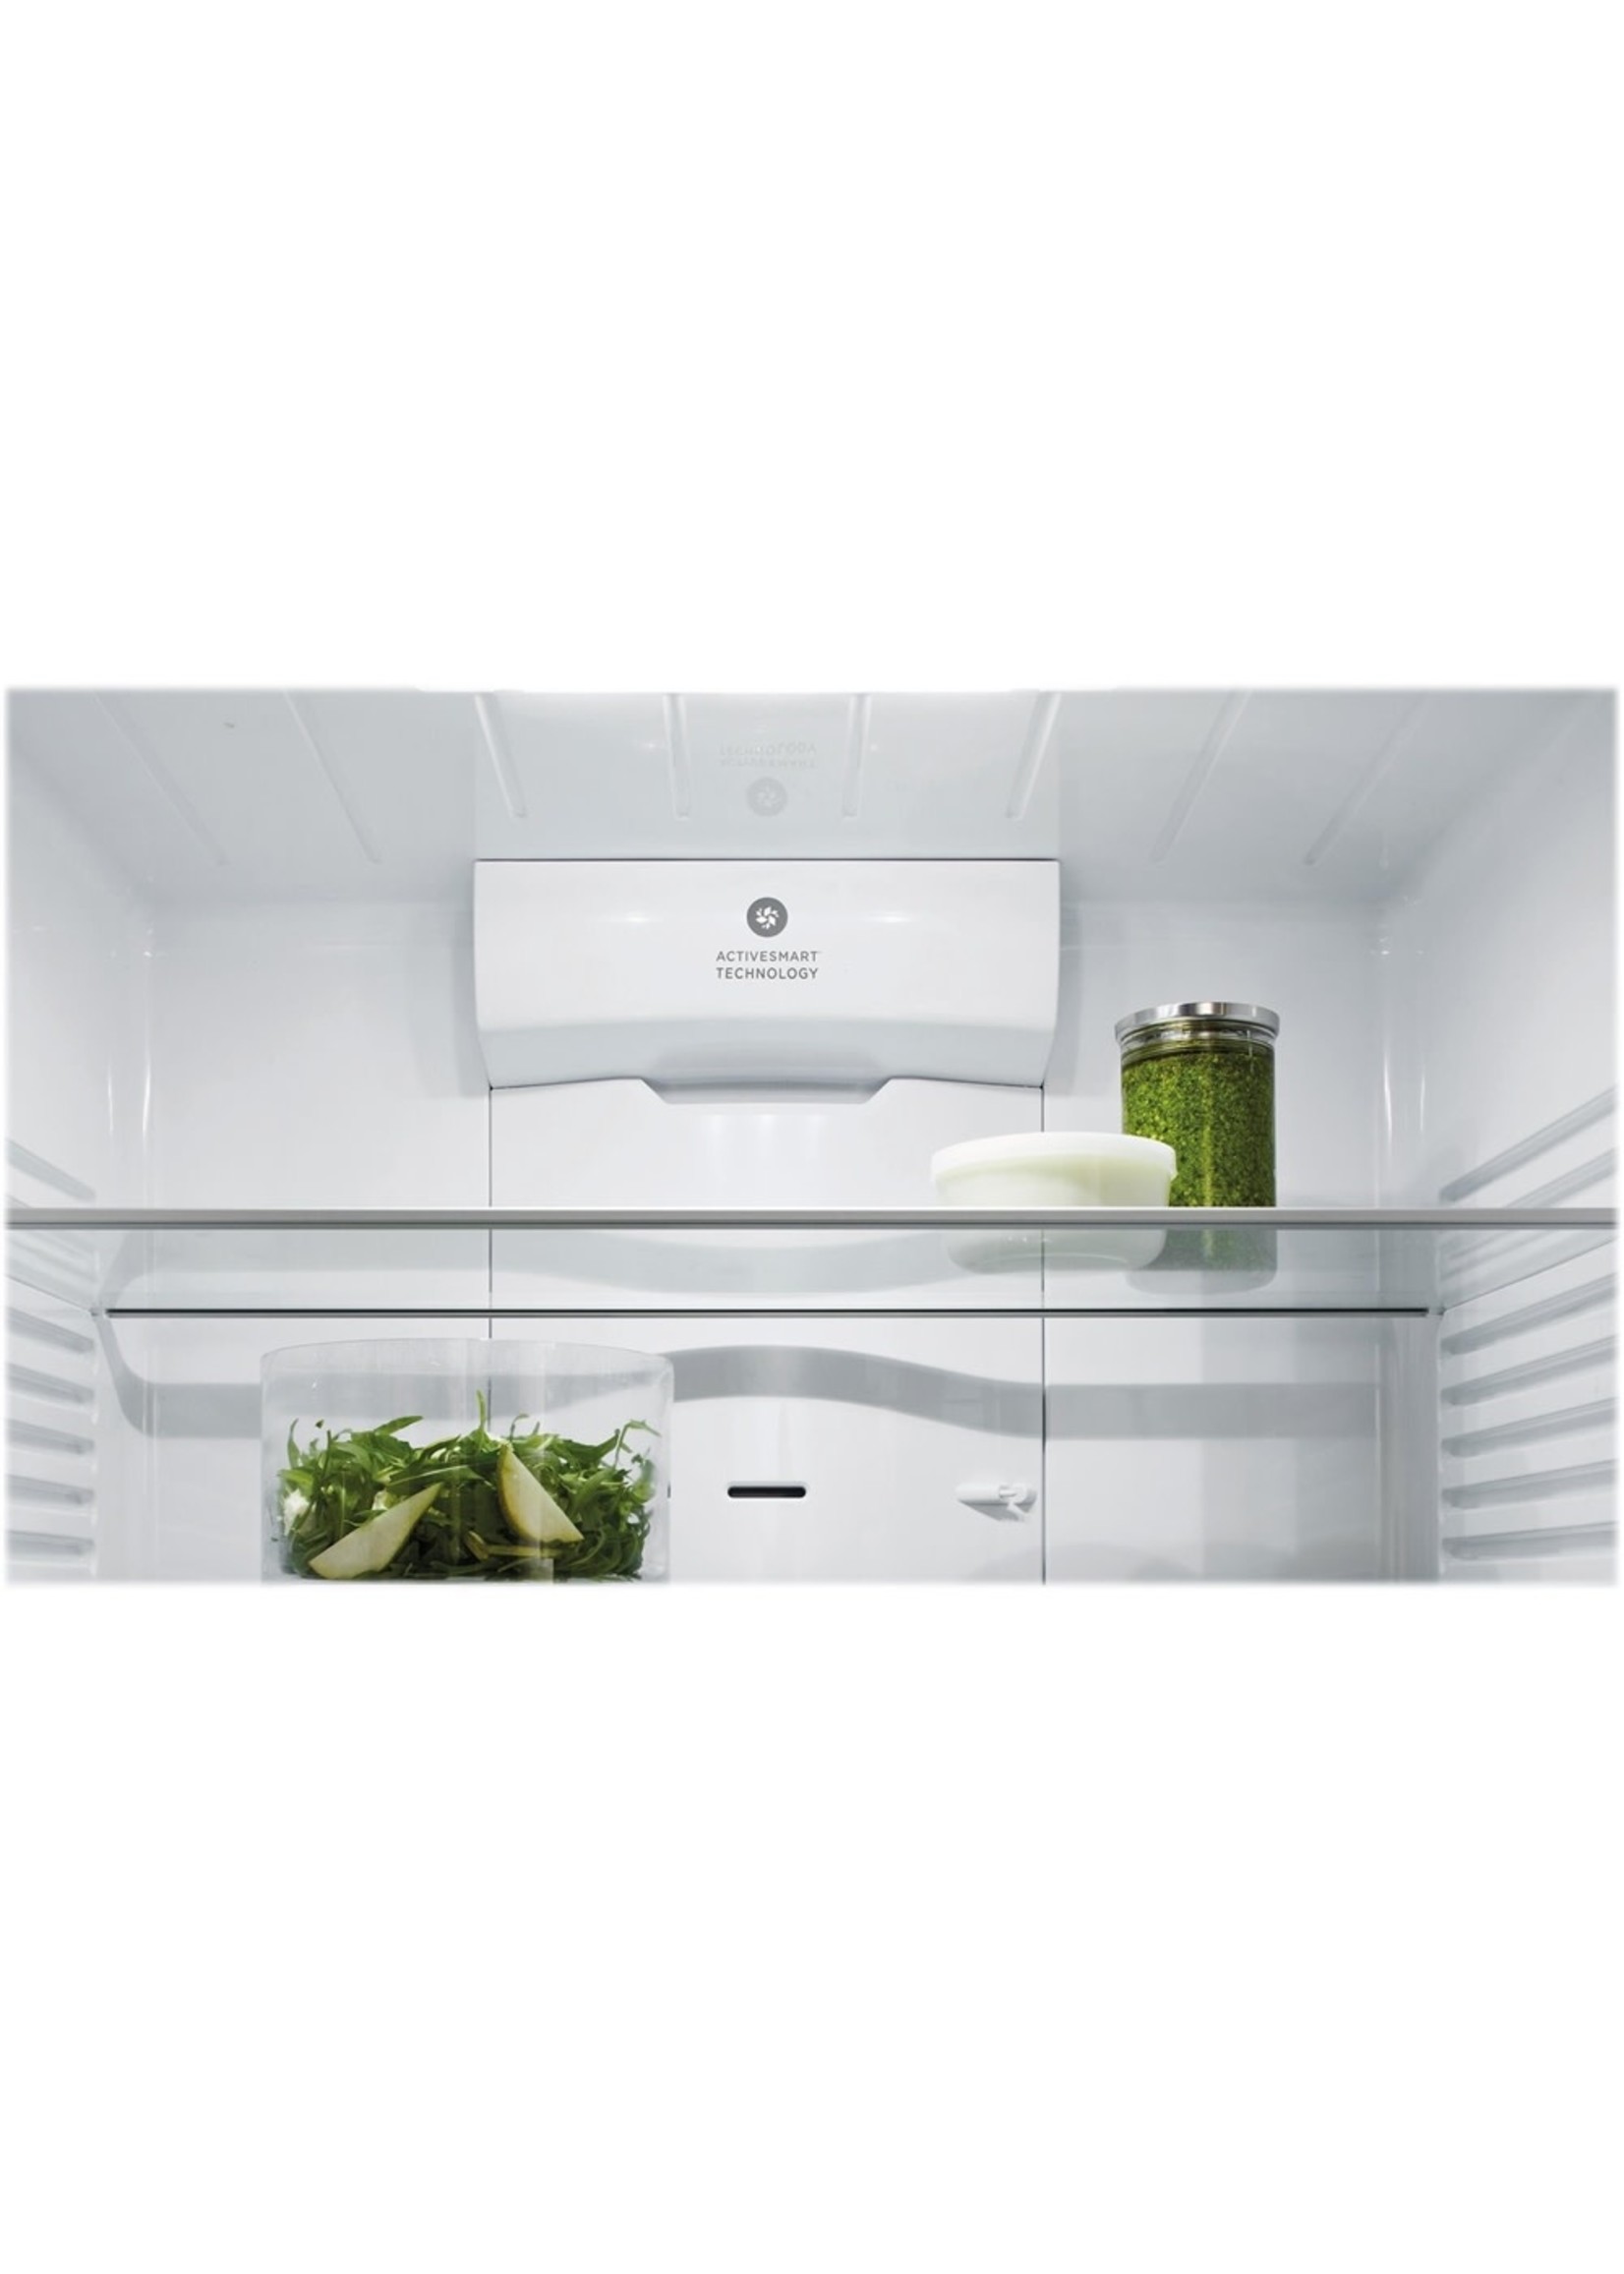 Fisher & Paykel Fisher & Paykel - ActiveSmart 17.1 Cu. Ft. Bottom-Freezer Counter-Depth Refrigerator - Stainless steel